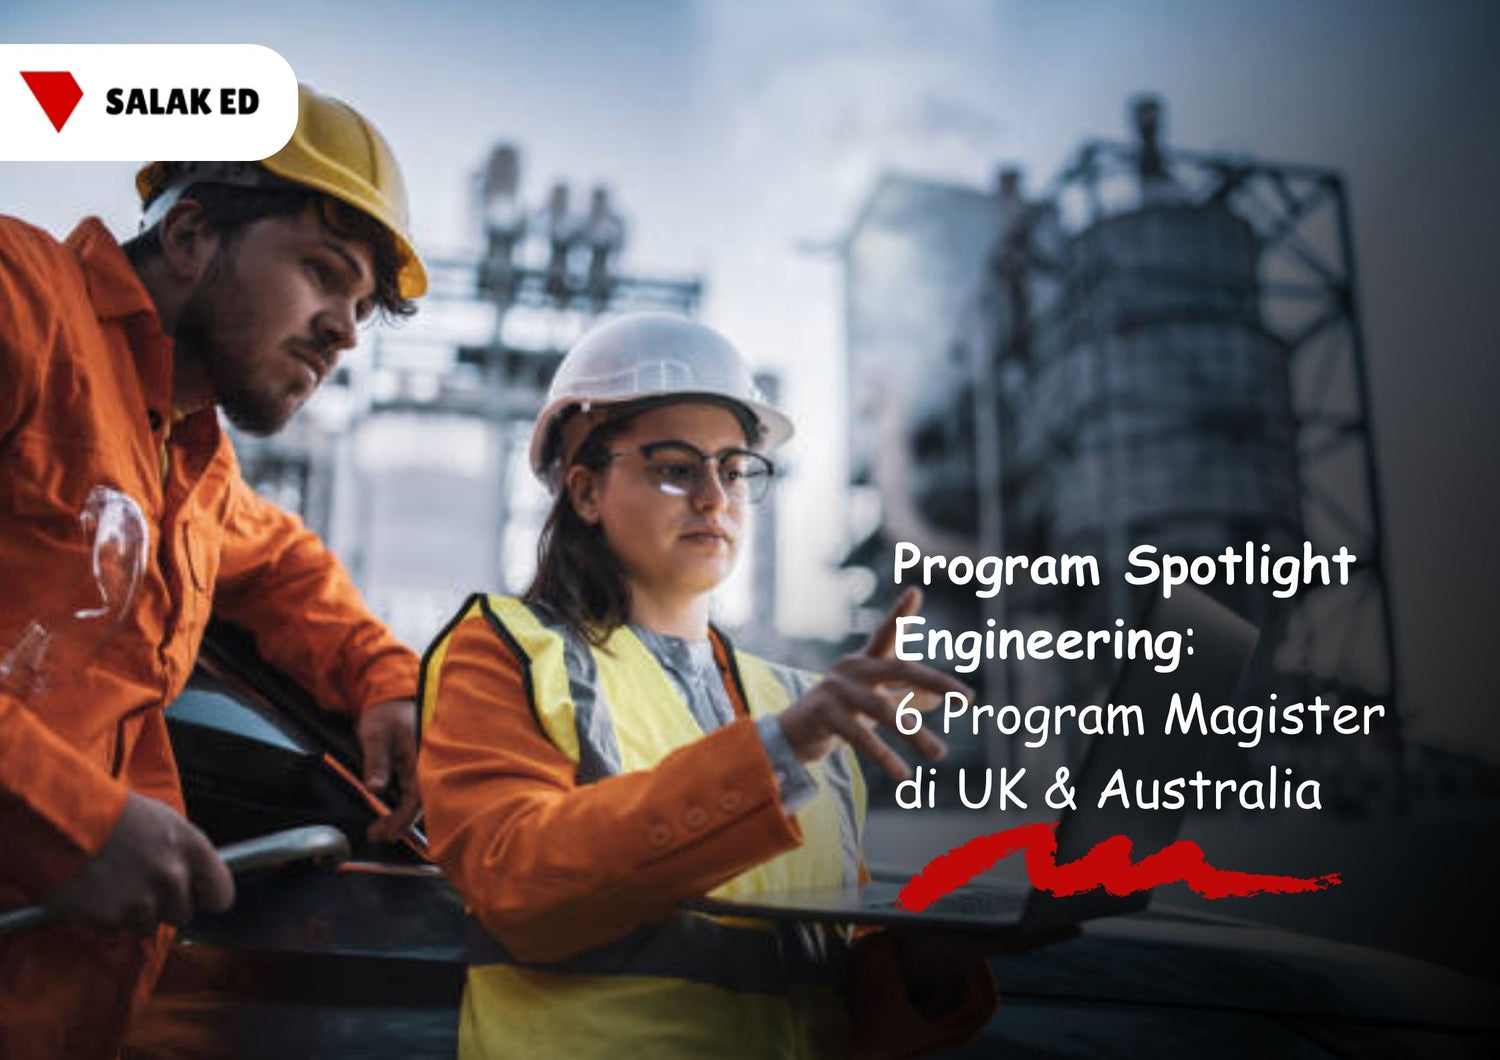 Program Spotlight Engineering: 6 Program Magister di UK & Australia